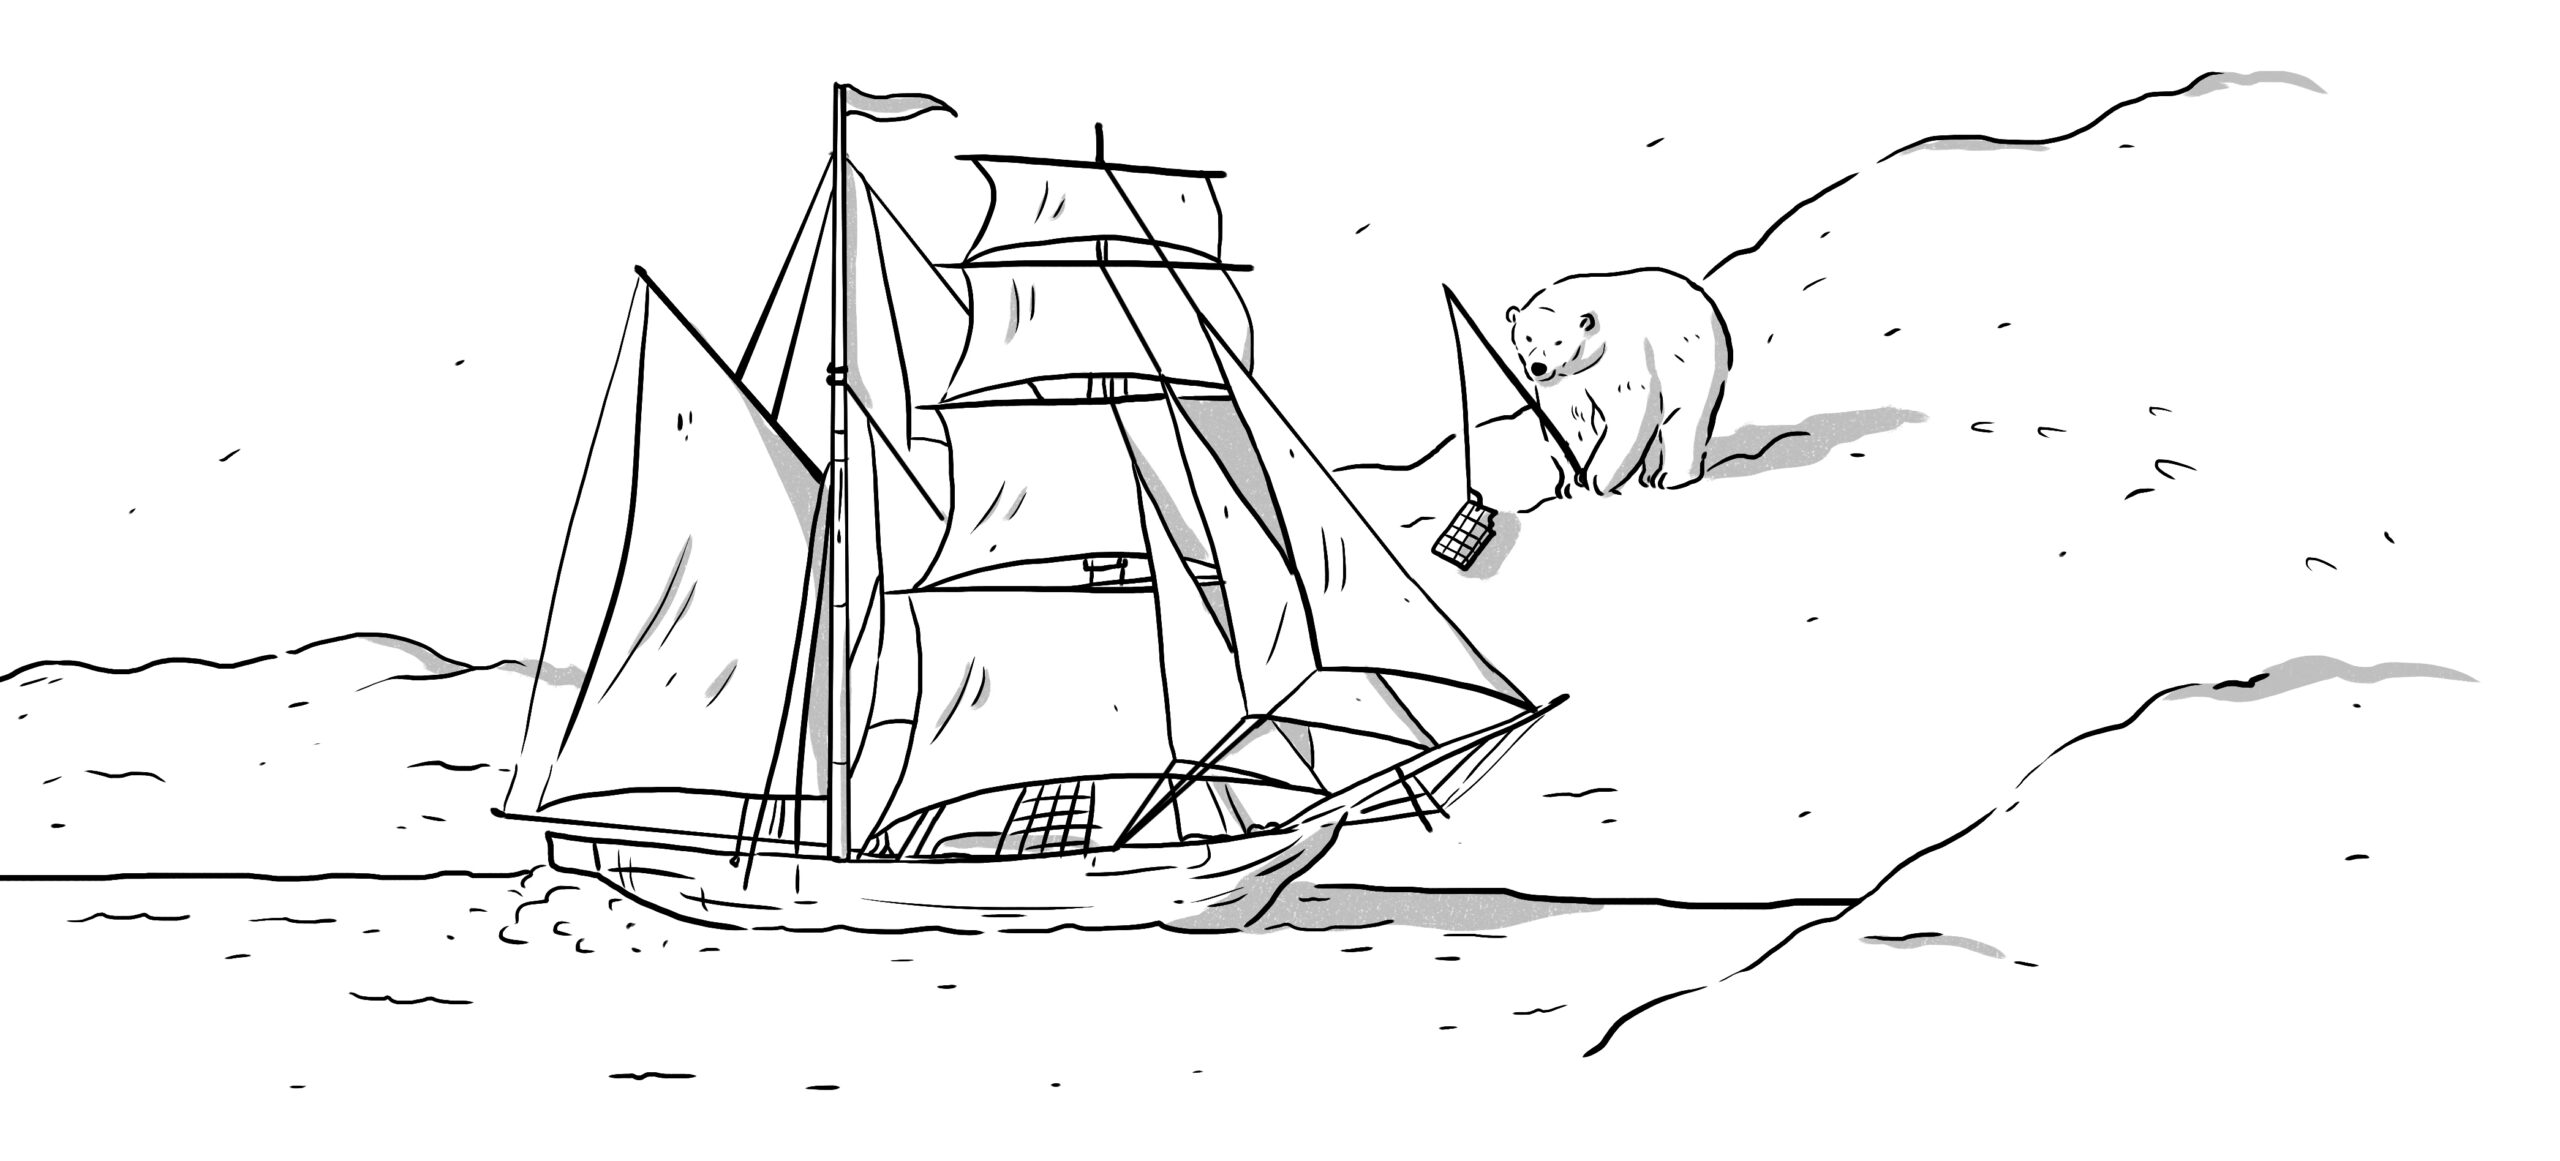 Polar bear boat drawing